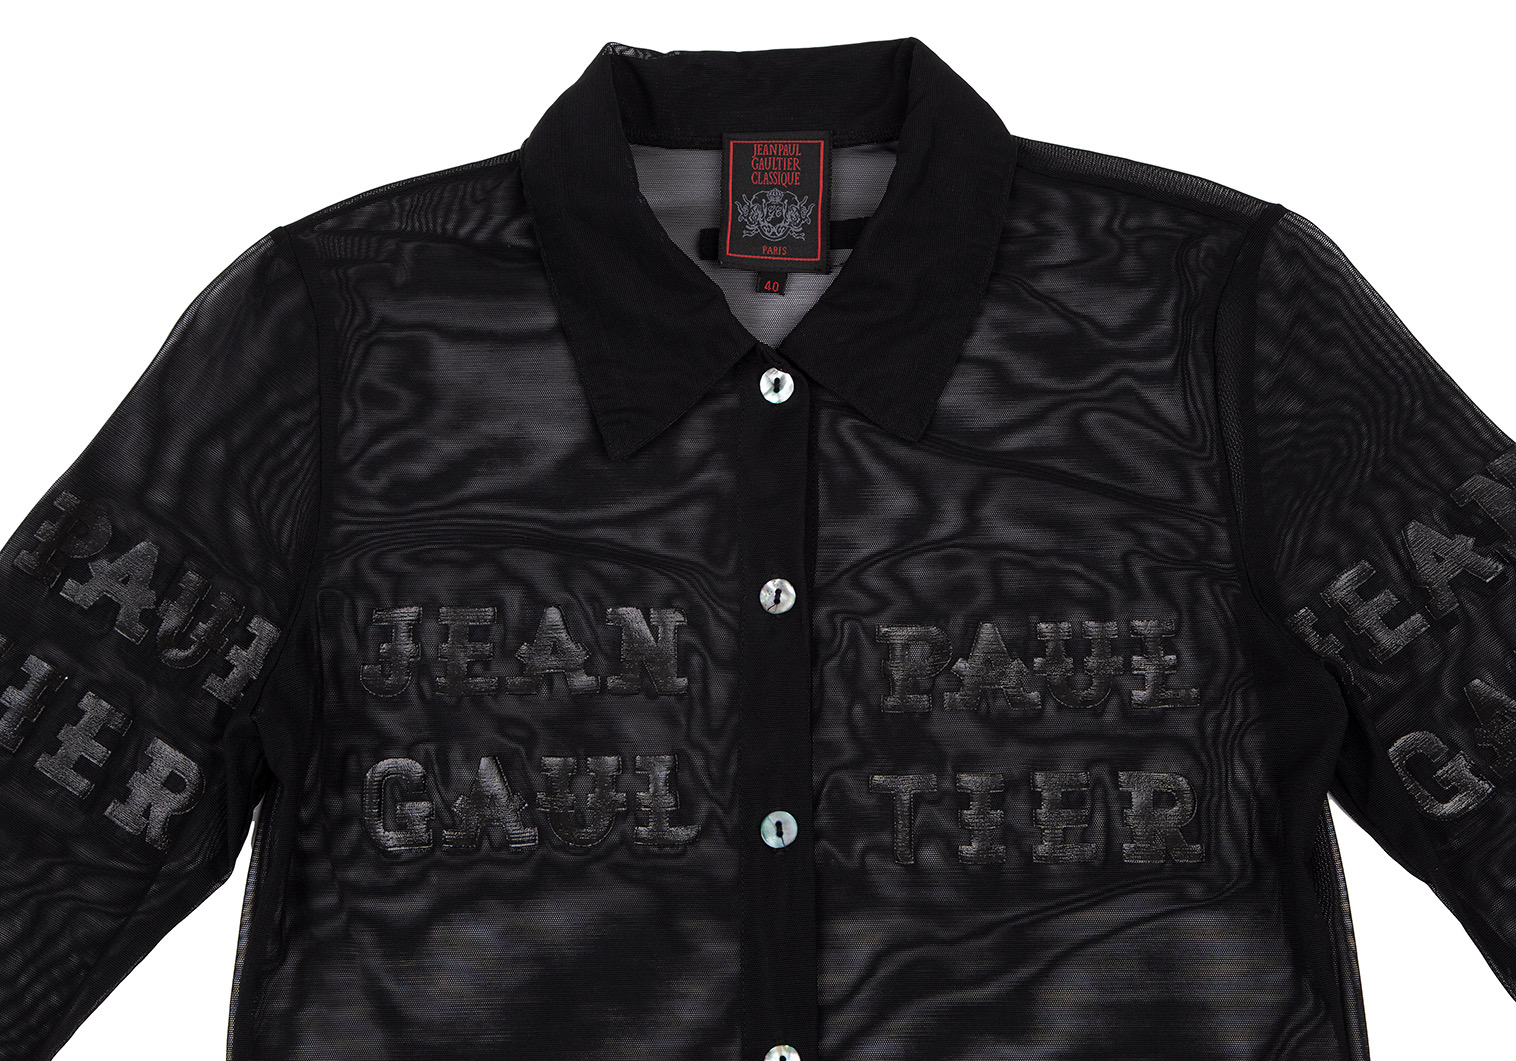 96SS Jean Paul GAULTIER CLASSIQUE パワーネット - Tシャツ